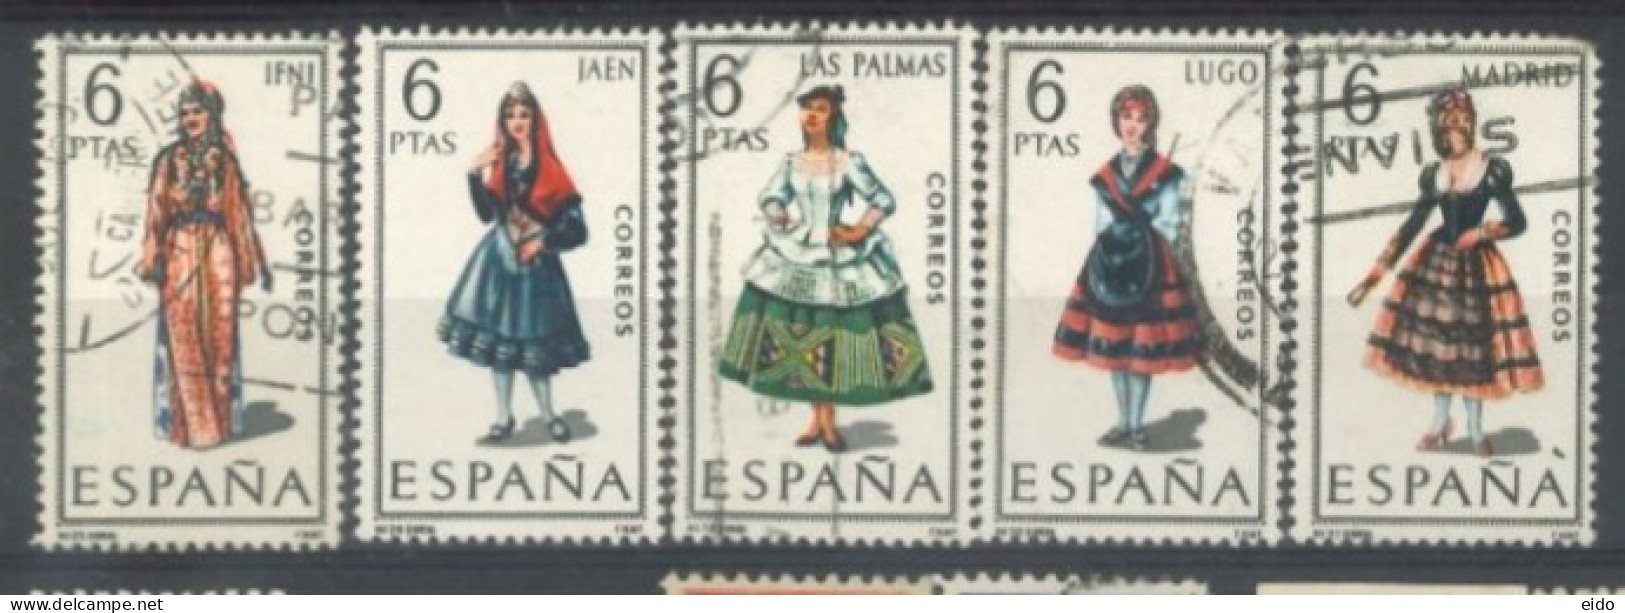 SPAIN, 1969, REGIONAL COSTUMES STAMPS SET OF 5, # 1416/17,1421/22/34, &1437, USED. - Gebraucht